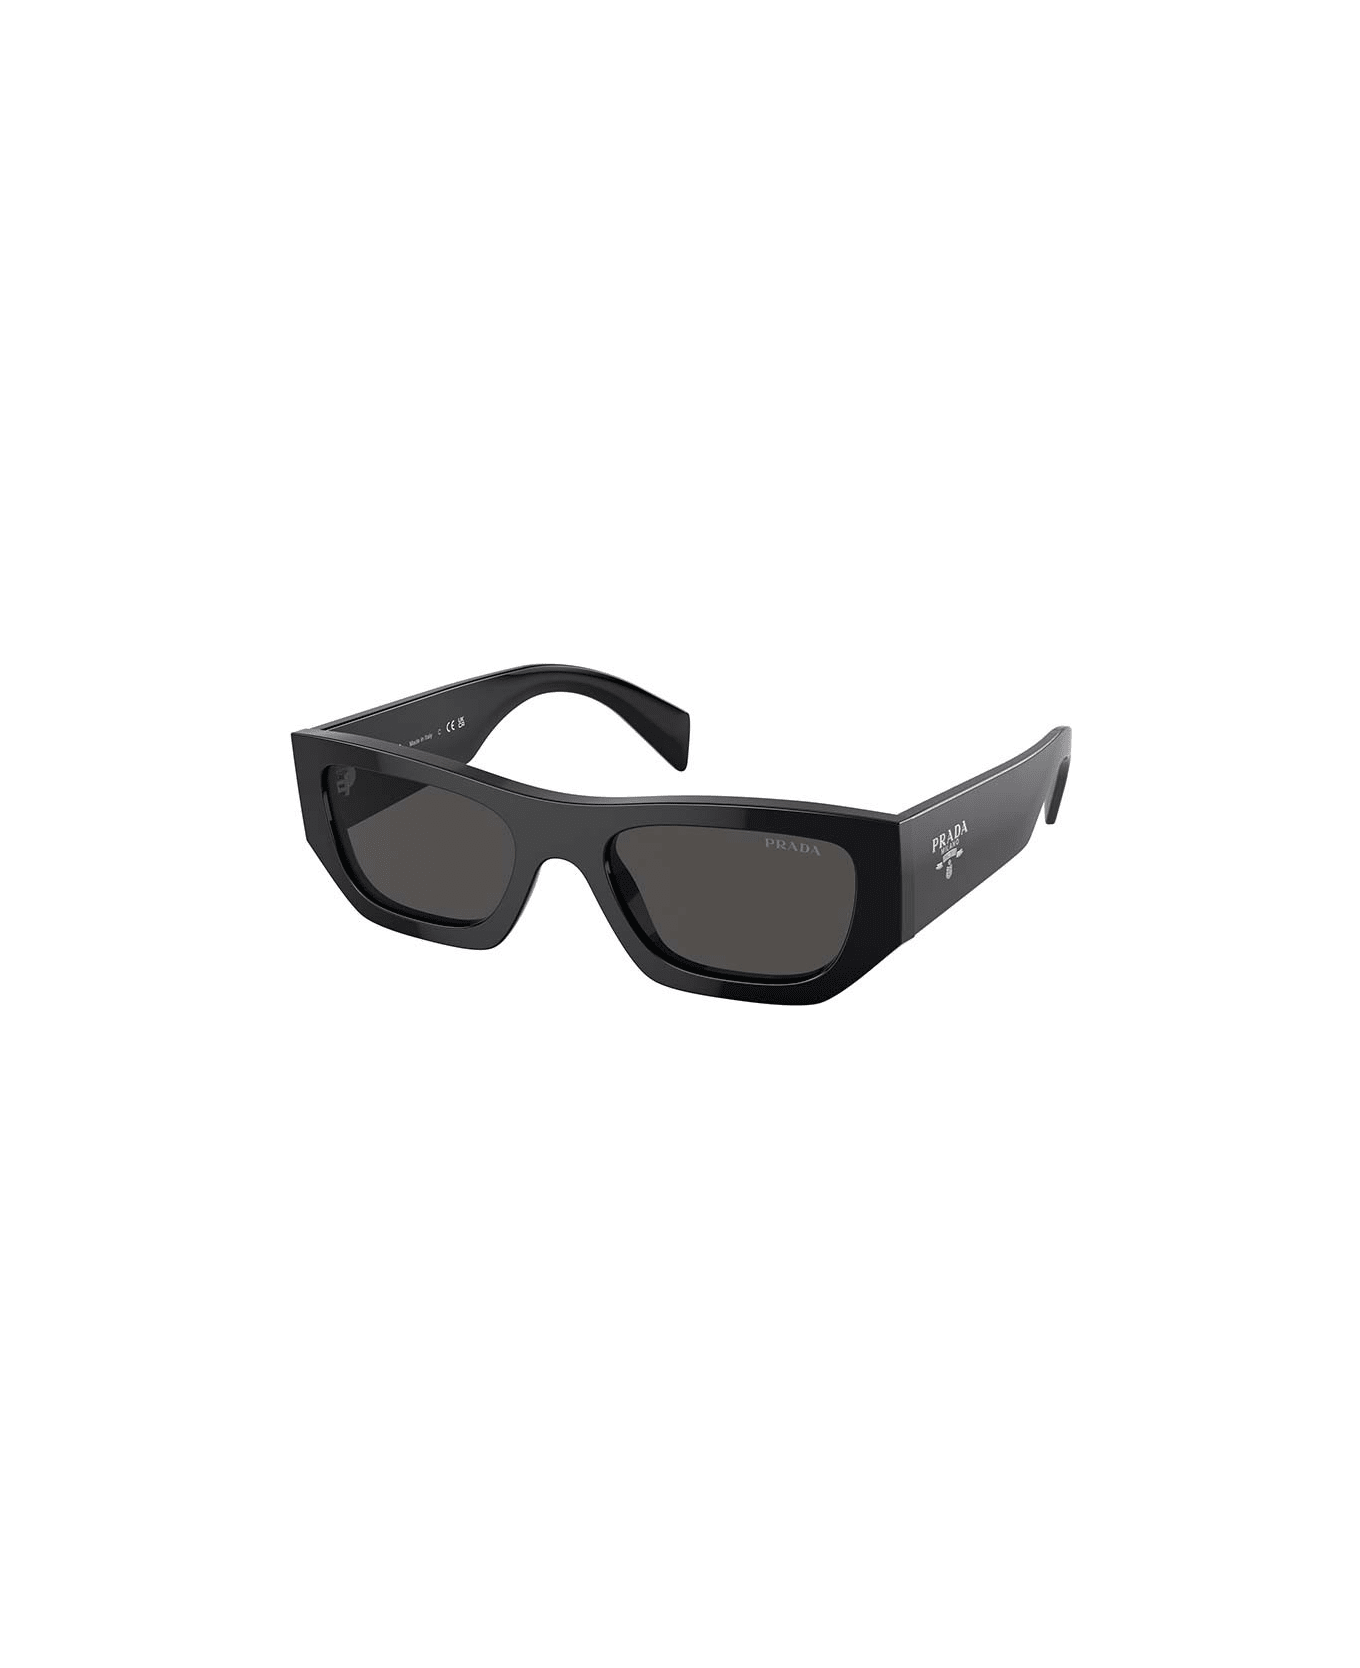 Prada Eyewear Sunglasses - 16K08Z サングラス